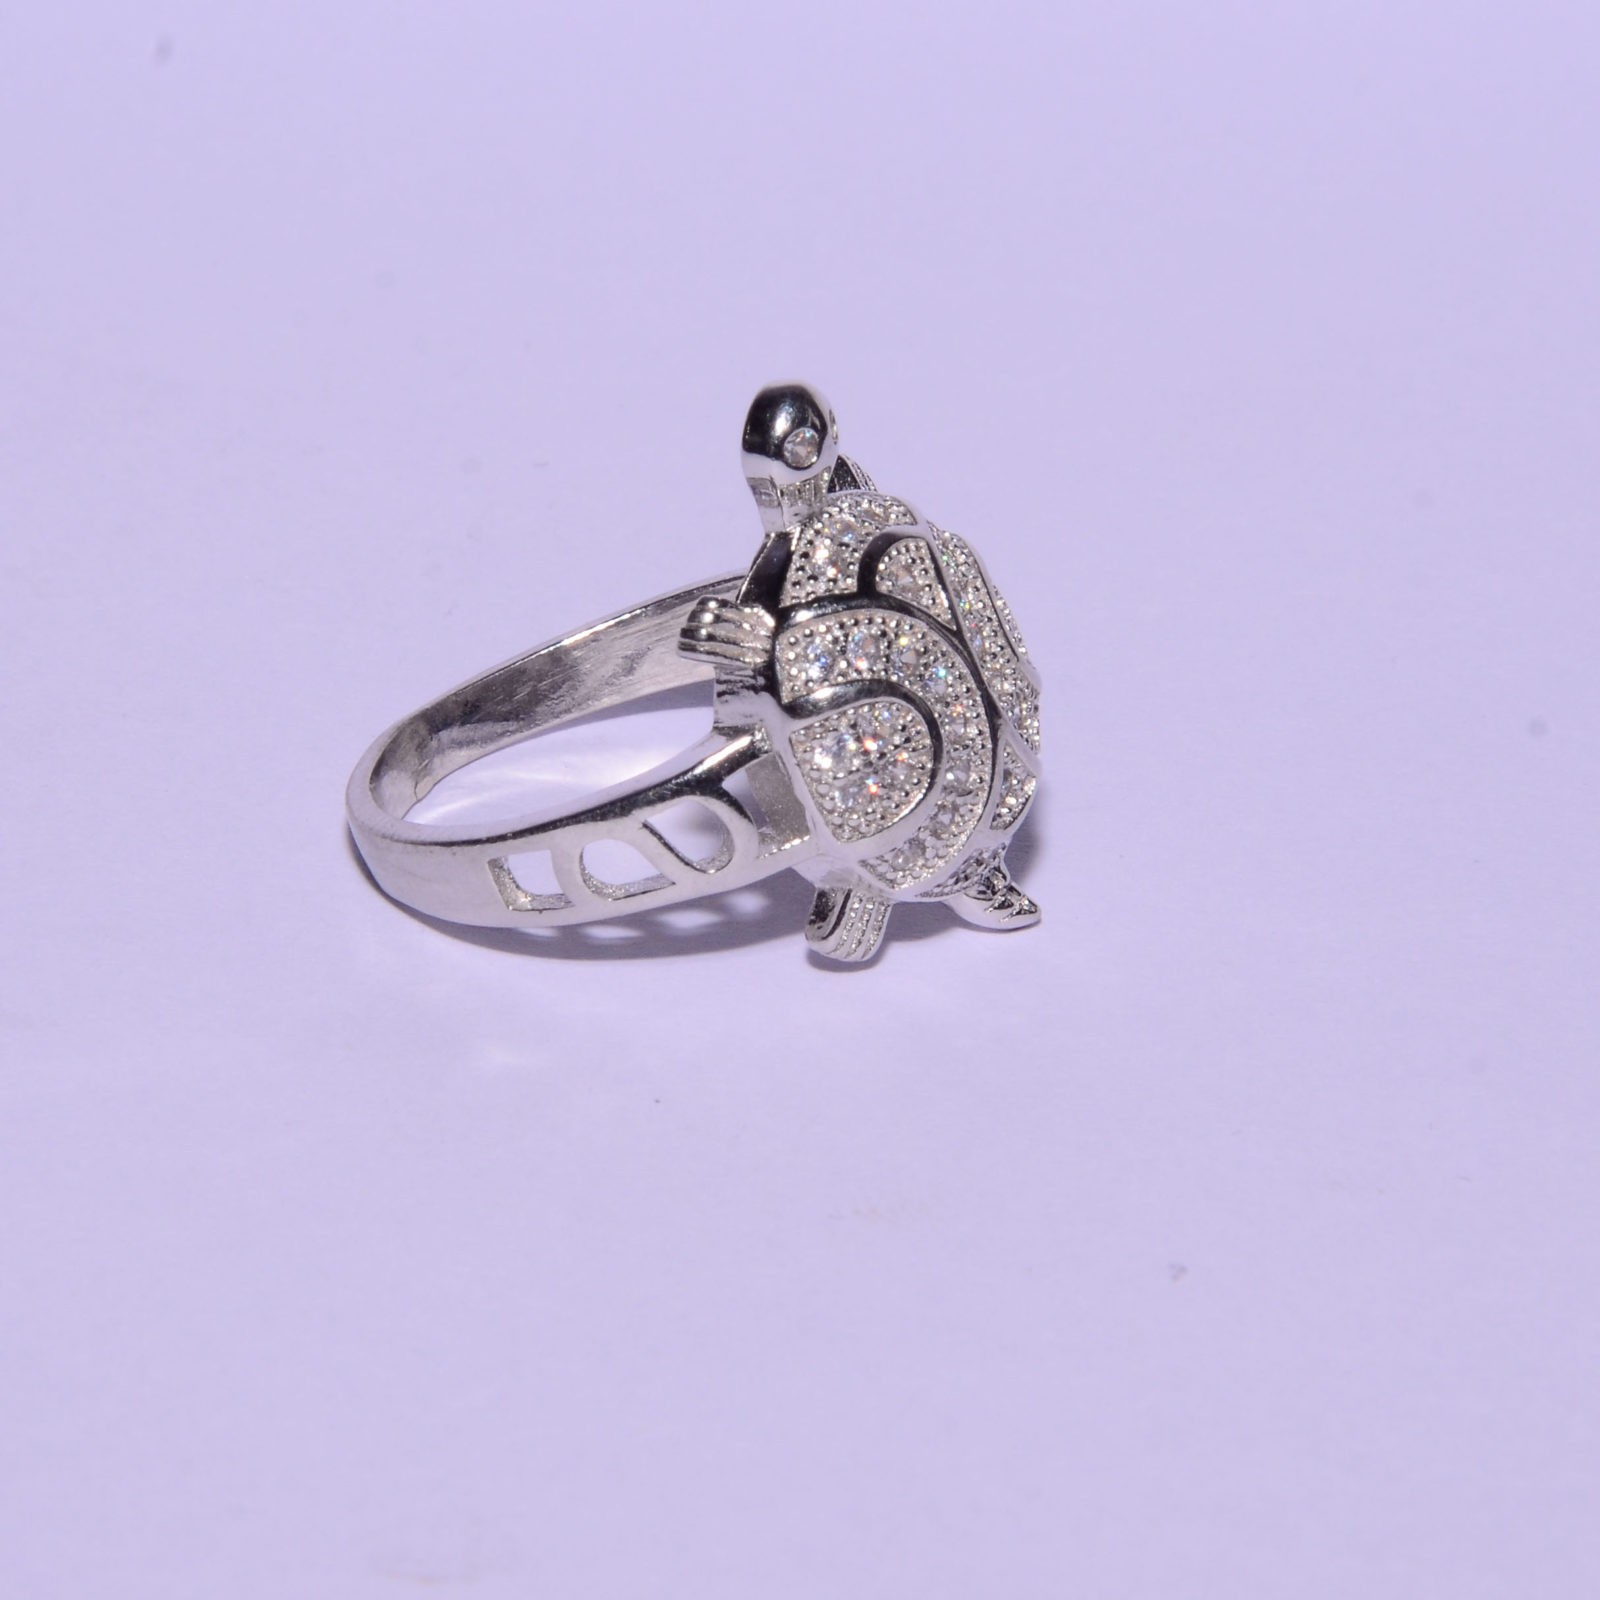 22K Gold 'Tortoise' Ring with Cz For Women - 235-GR6278 in 3.350 Grams